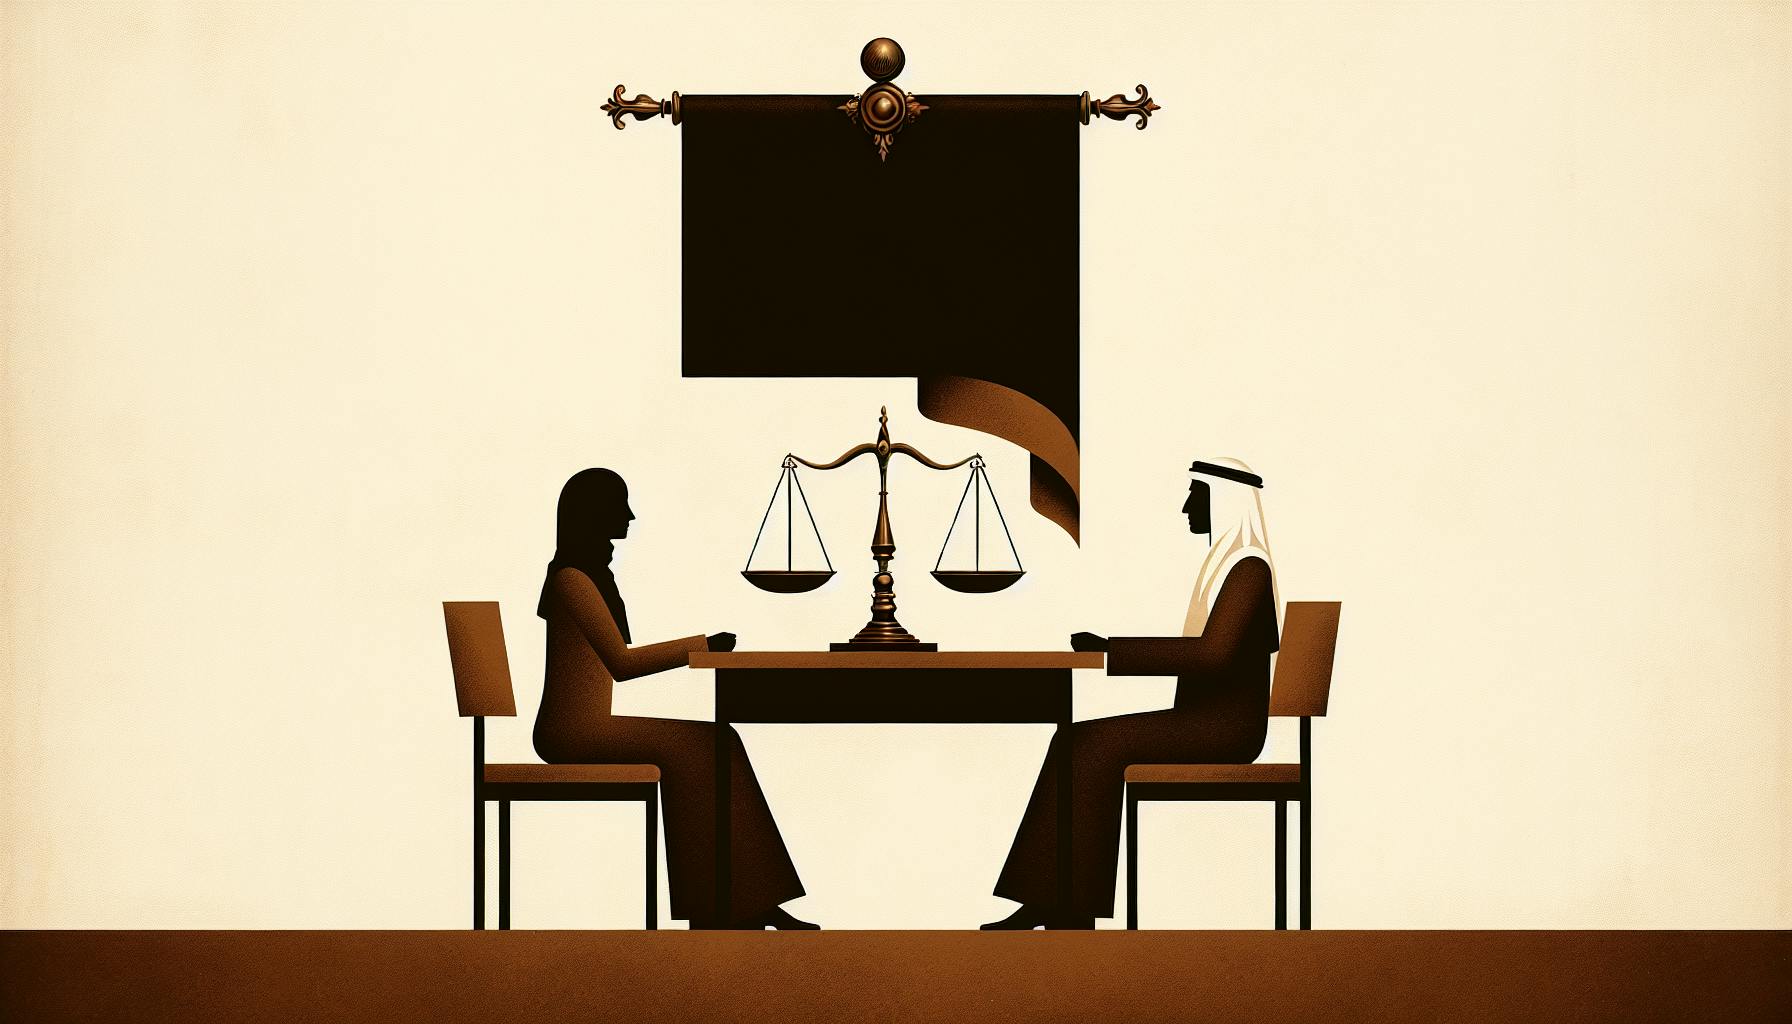 Arbitration: Legal Concept Explained